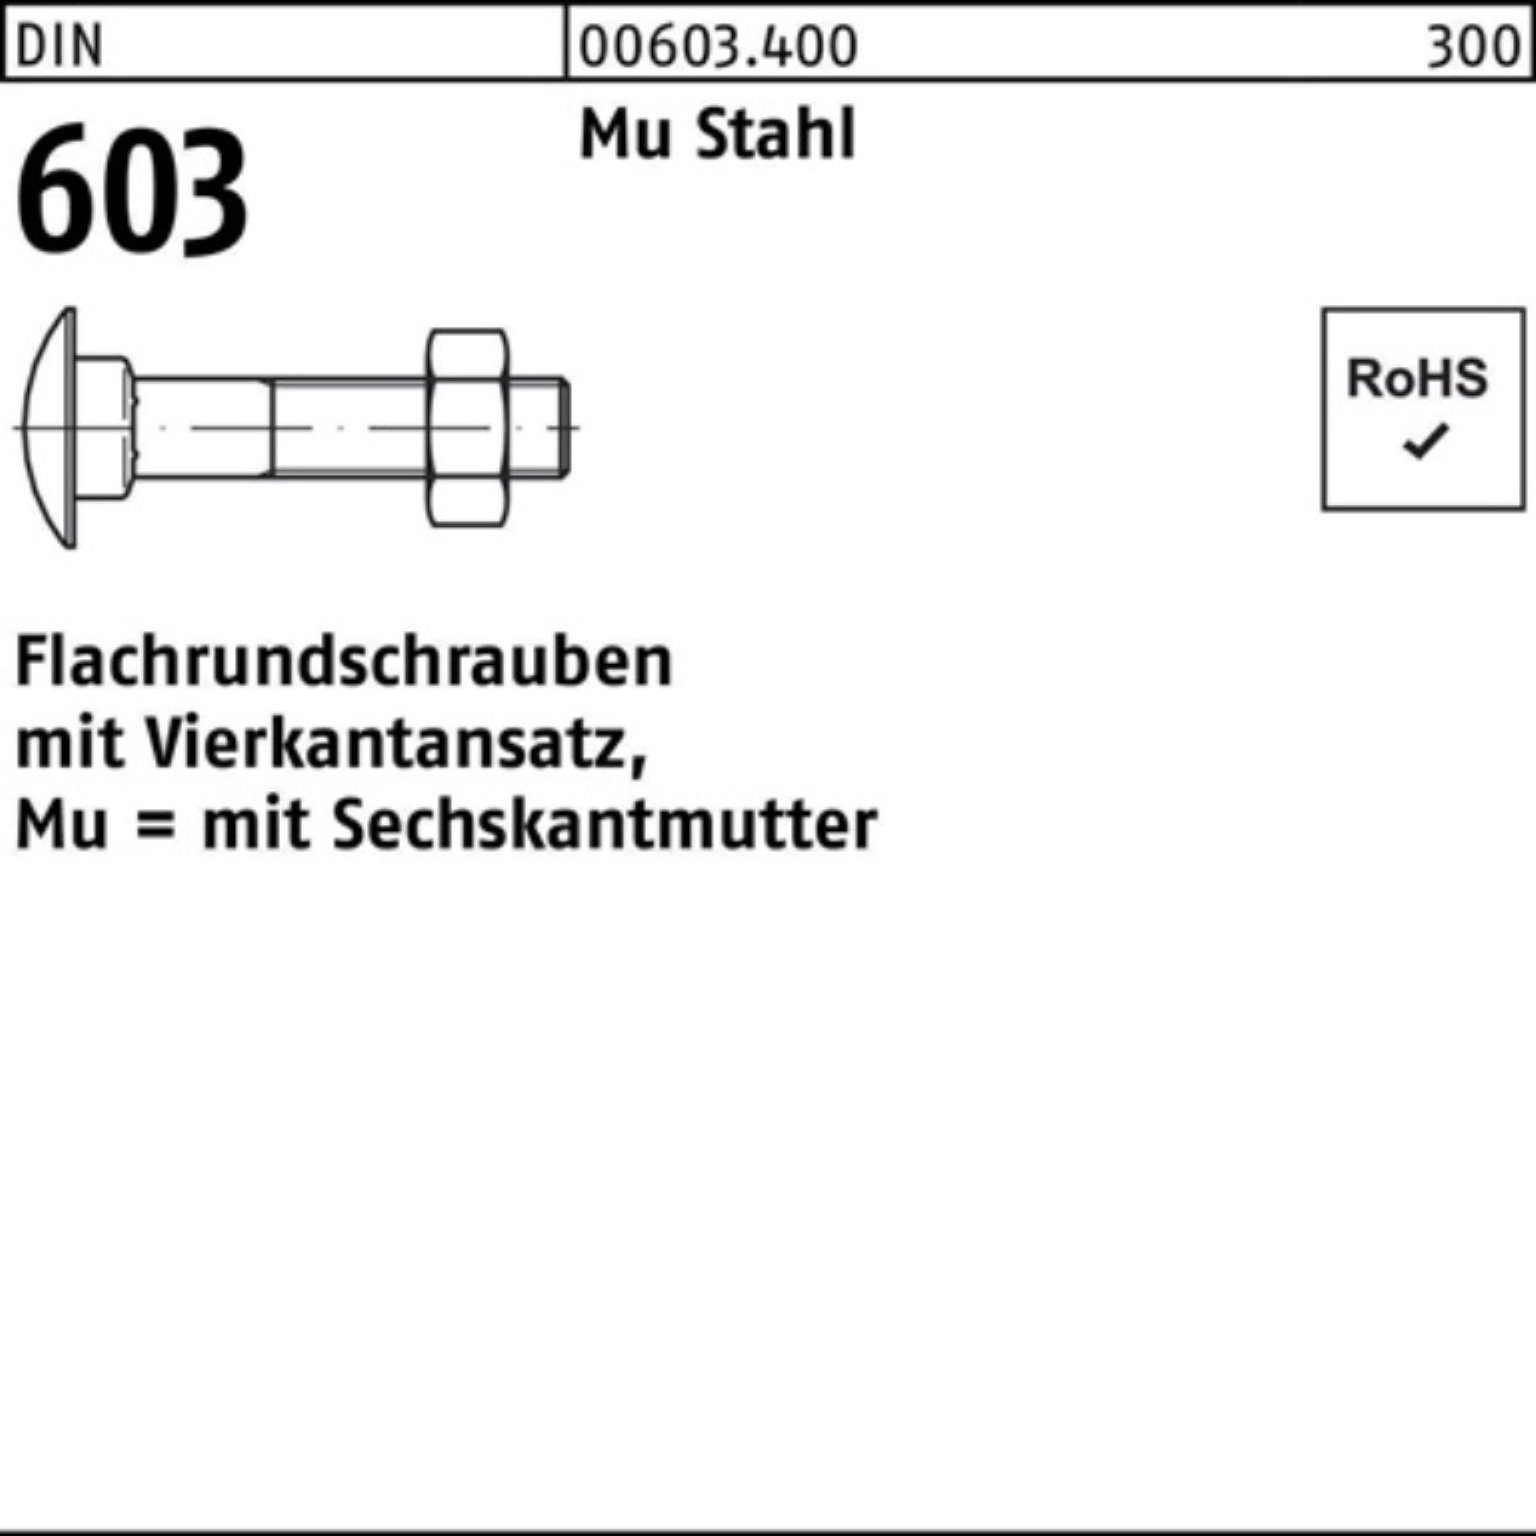 DIN Reyher 100er Pack 603 Schraube Vierkantansatz/6-ktmutter M12x40 Flachrundschraube